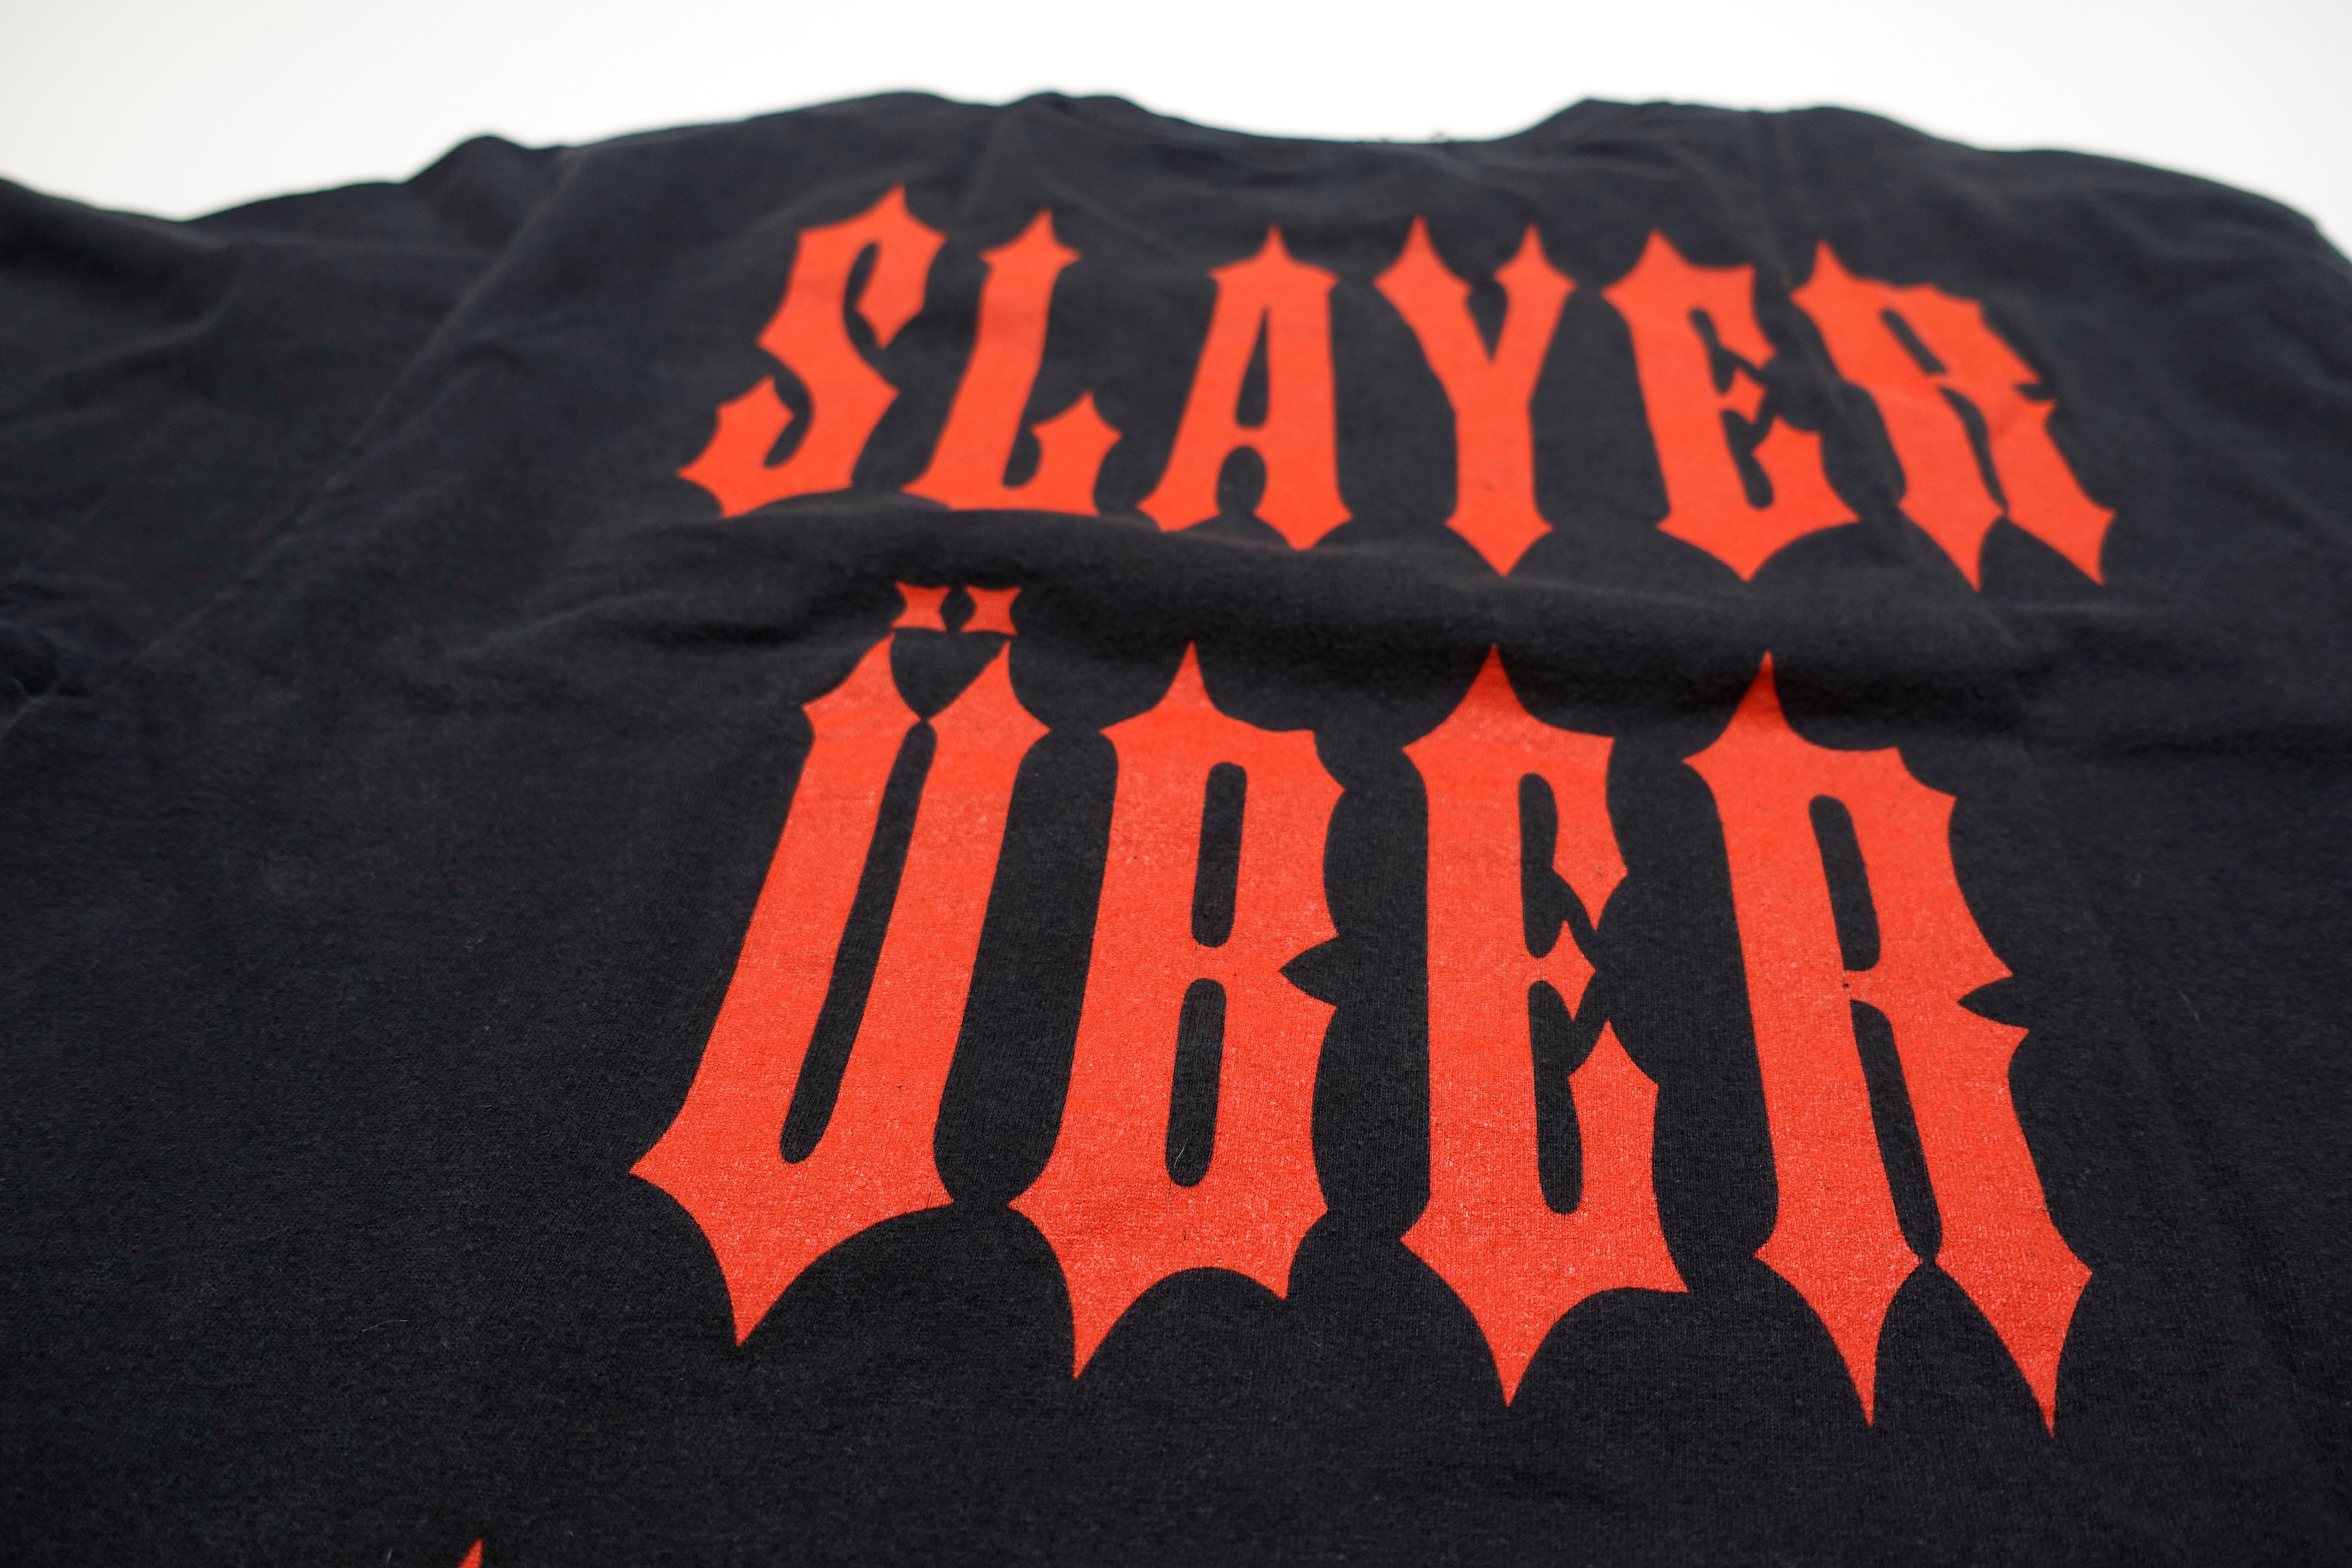 Slayer - Slayer Uber Alles 2010 Tour Shirt Size Large